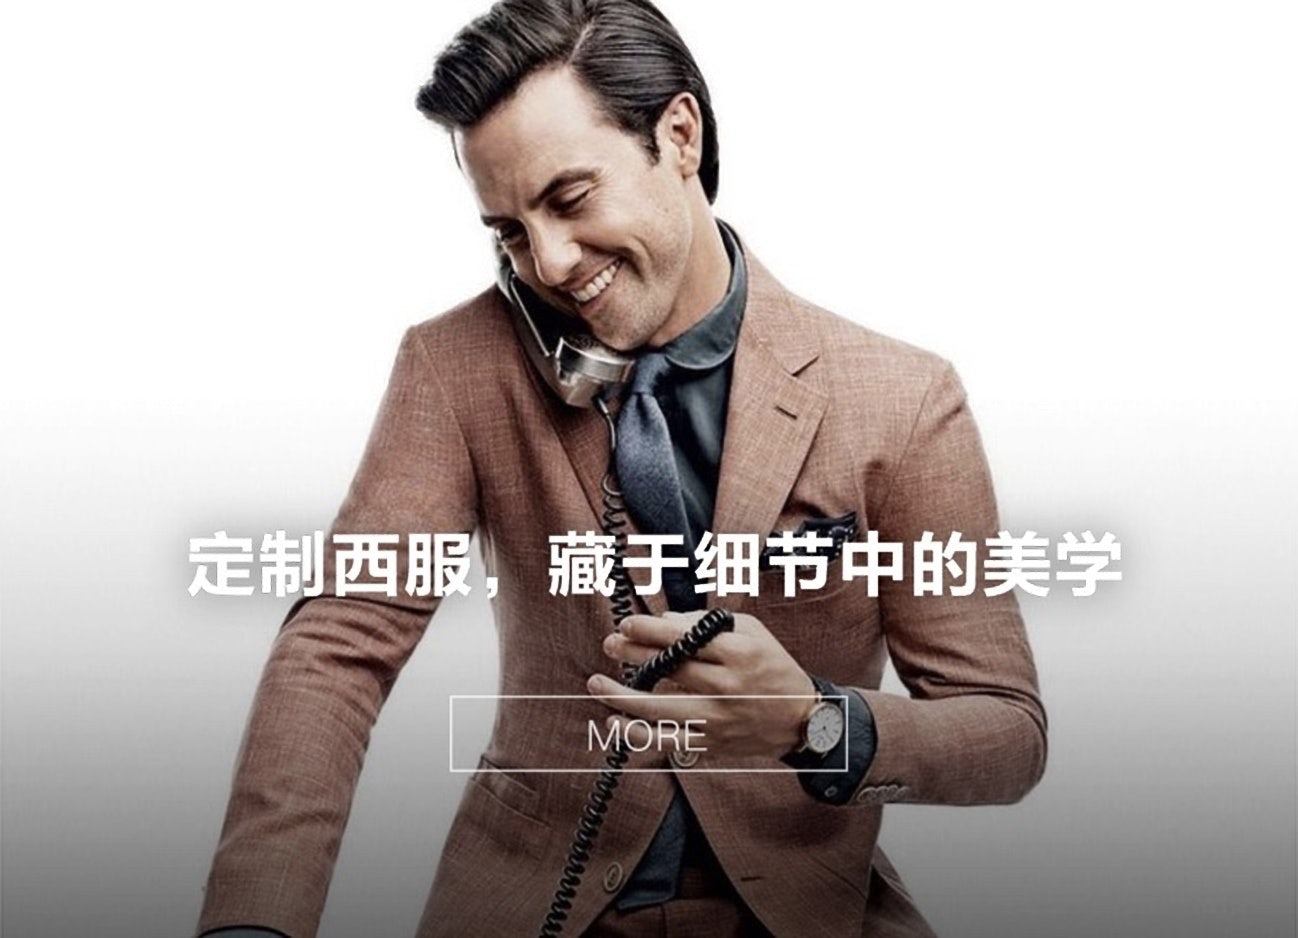 A screenshot of Toplife's WeChat mini-program